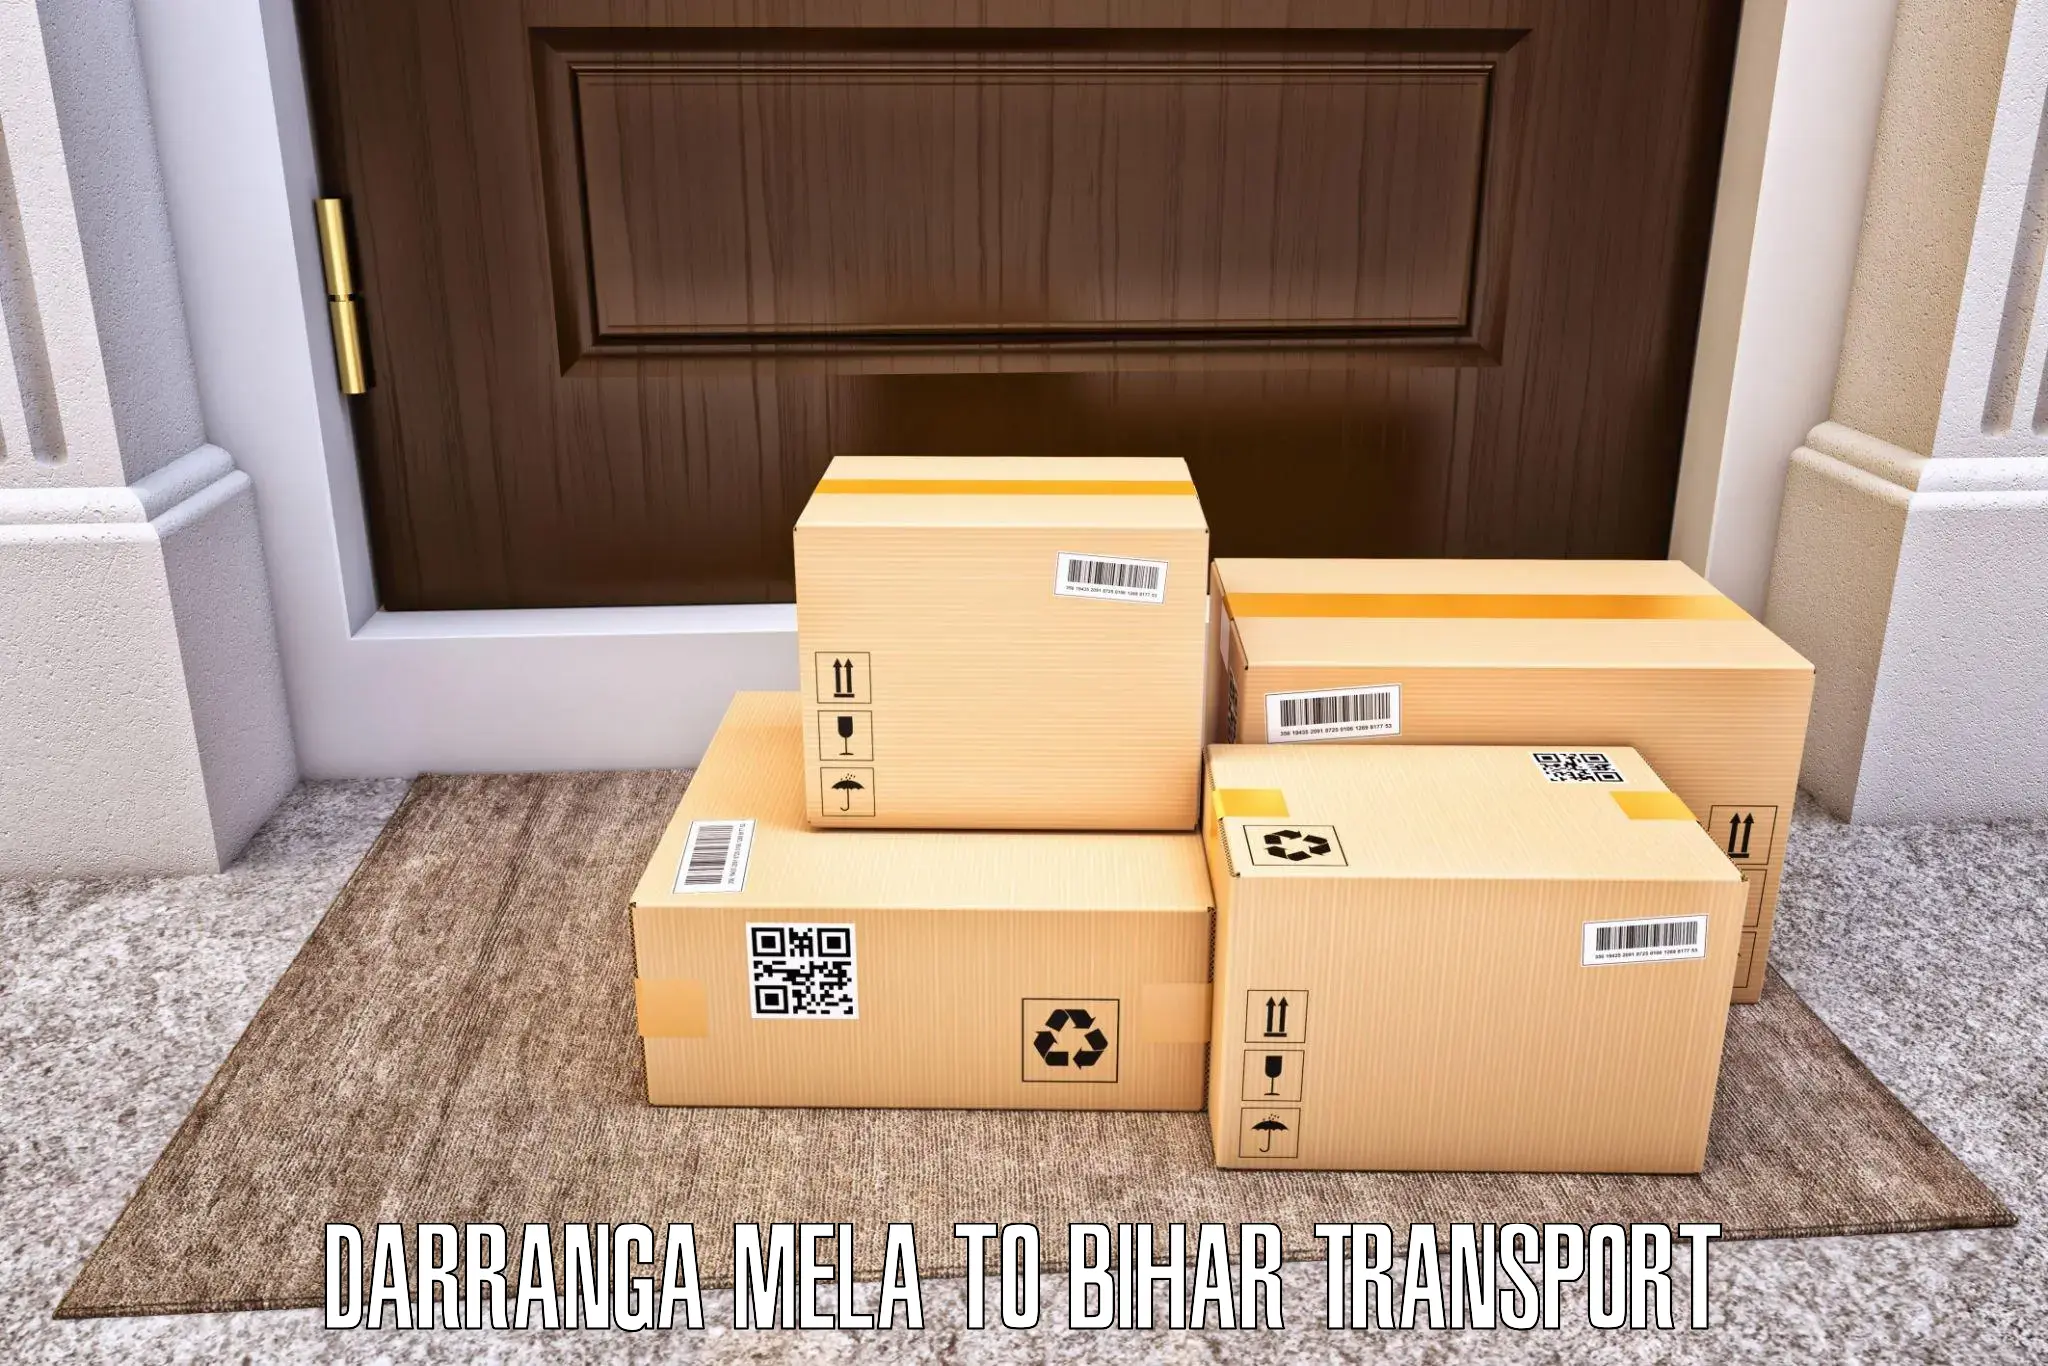 Part load transport service in India Darranga Mela to Dhaka